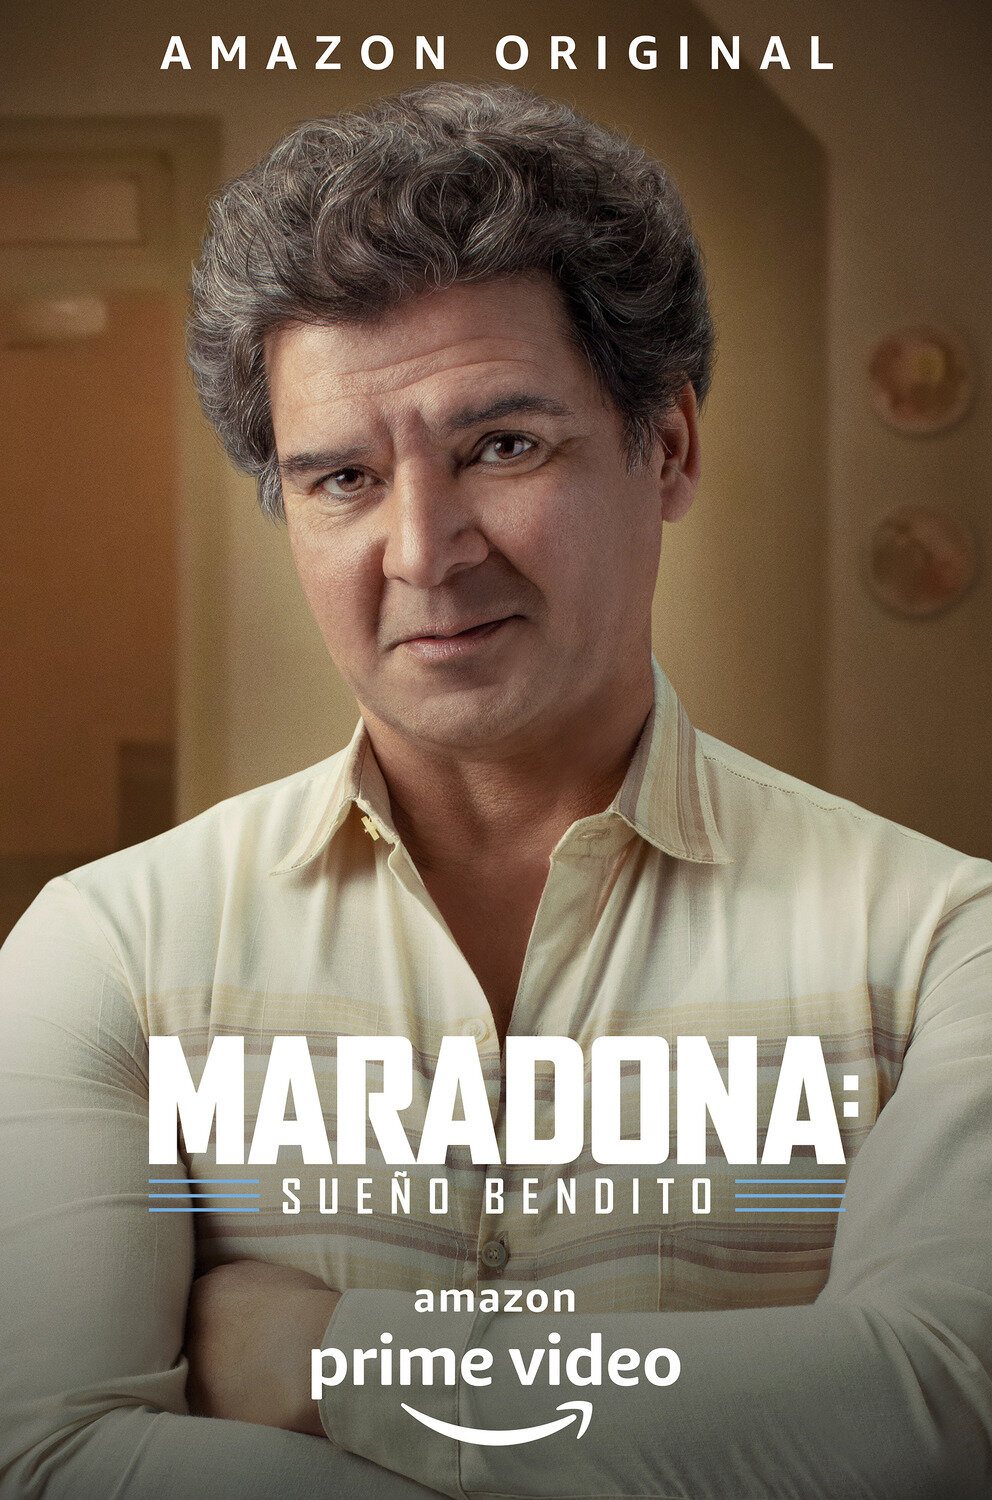 Diego Maradona Padre